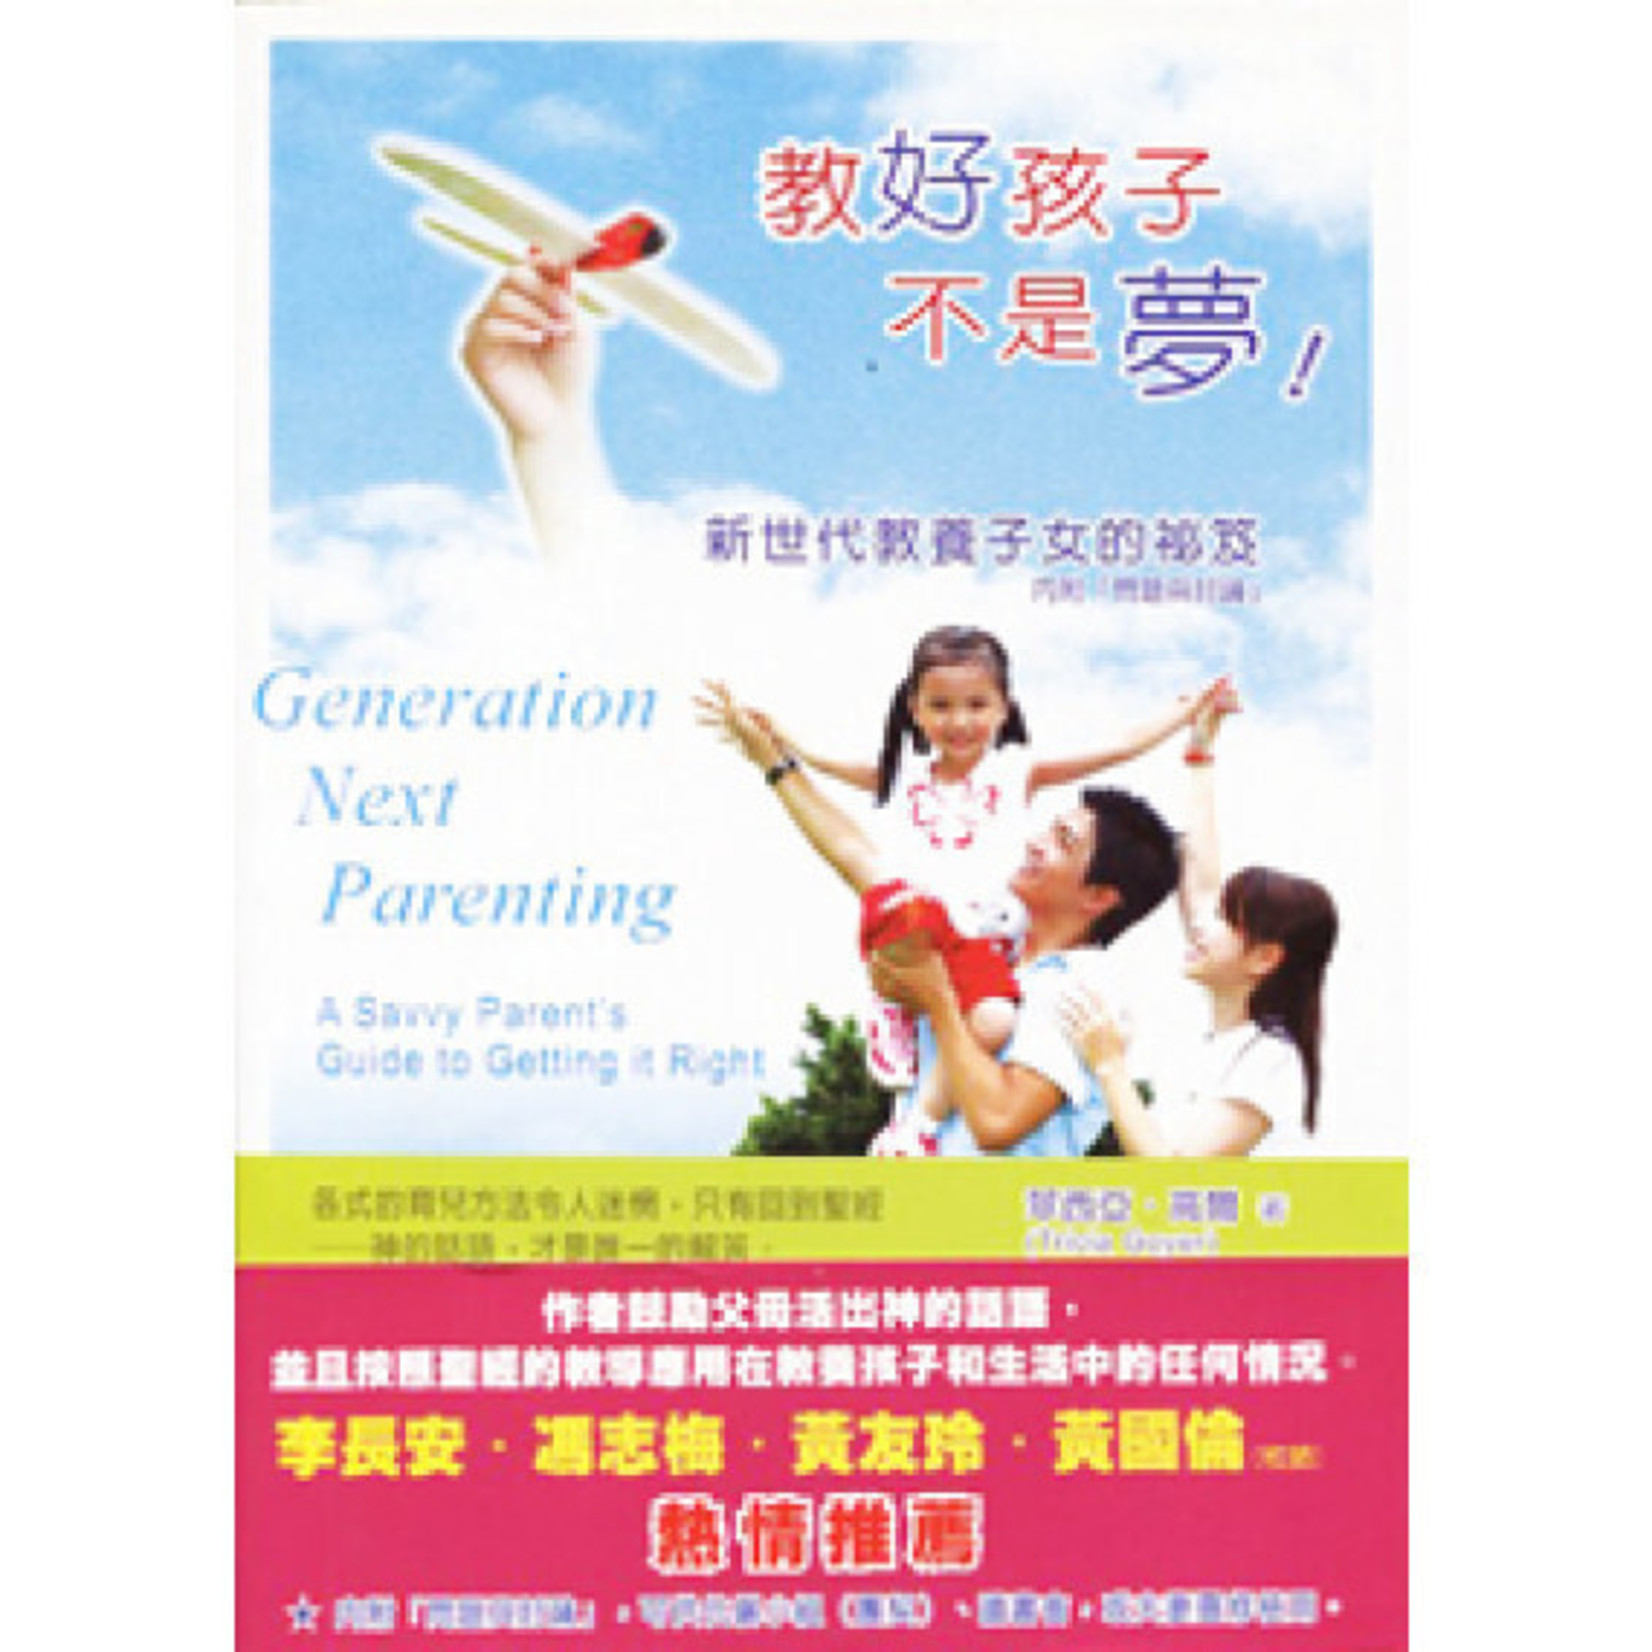 中國主日學協會 China Sunday School Association 教好孩子不是夢：新世代教養子女的秘笈 Generation Next Parenting : A Savvy Parent's guide to getting it right